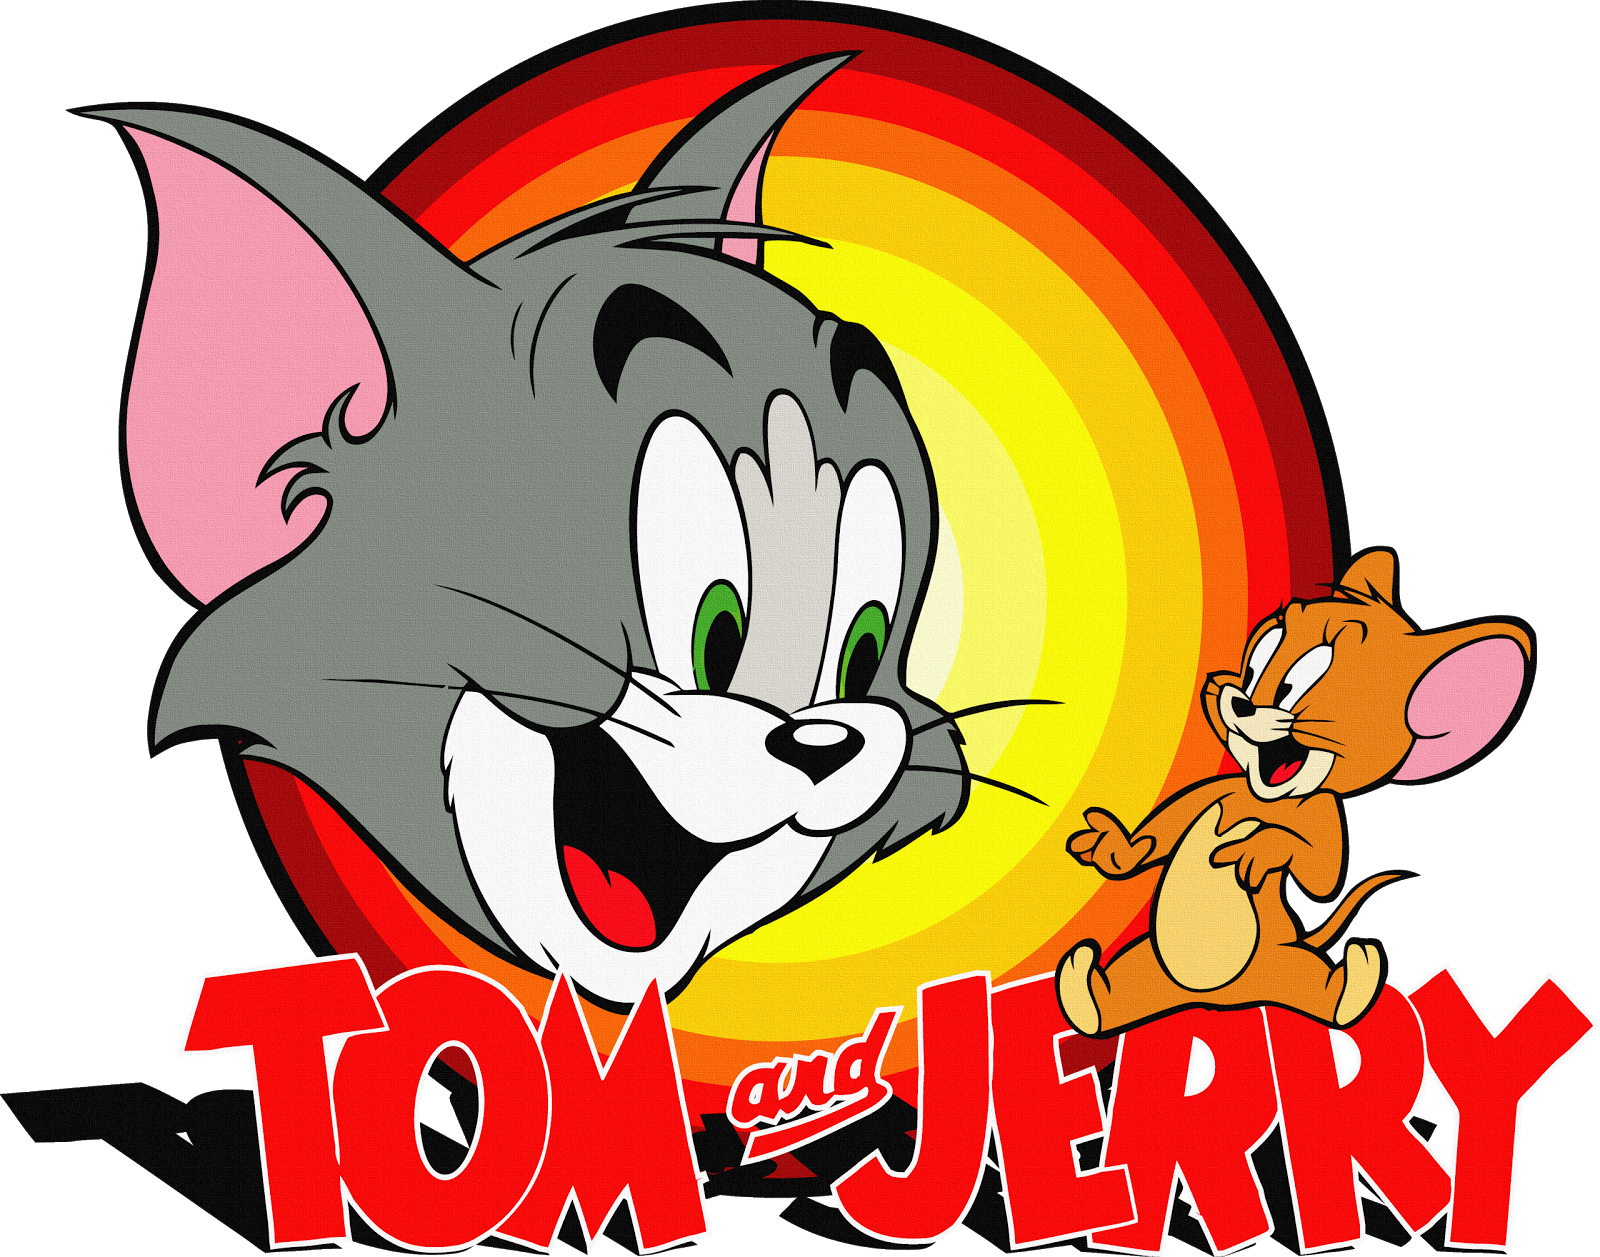 Tom And Jerry Cartoon Logo